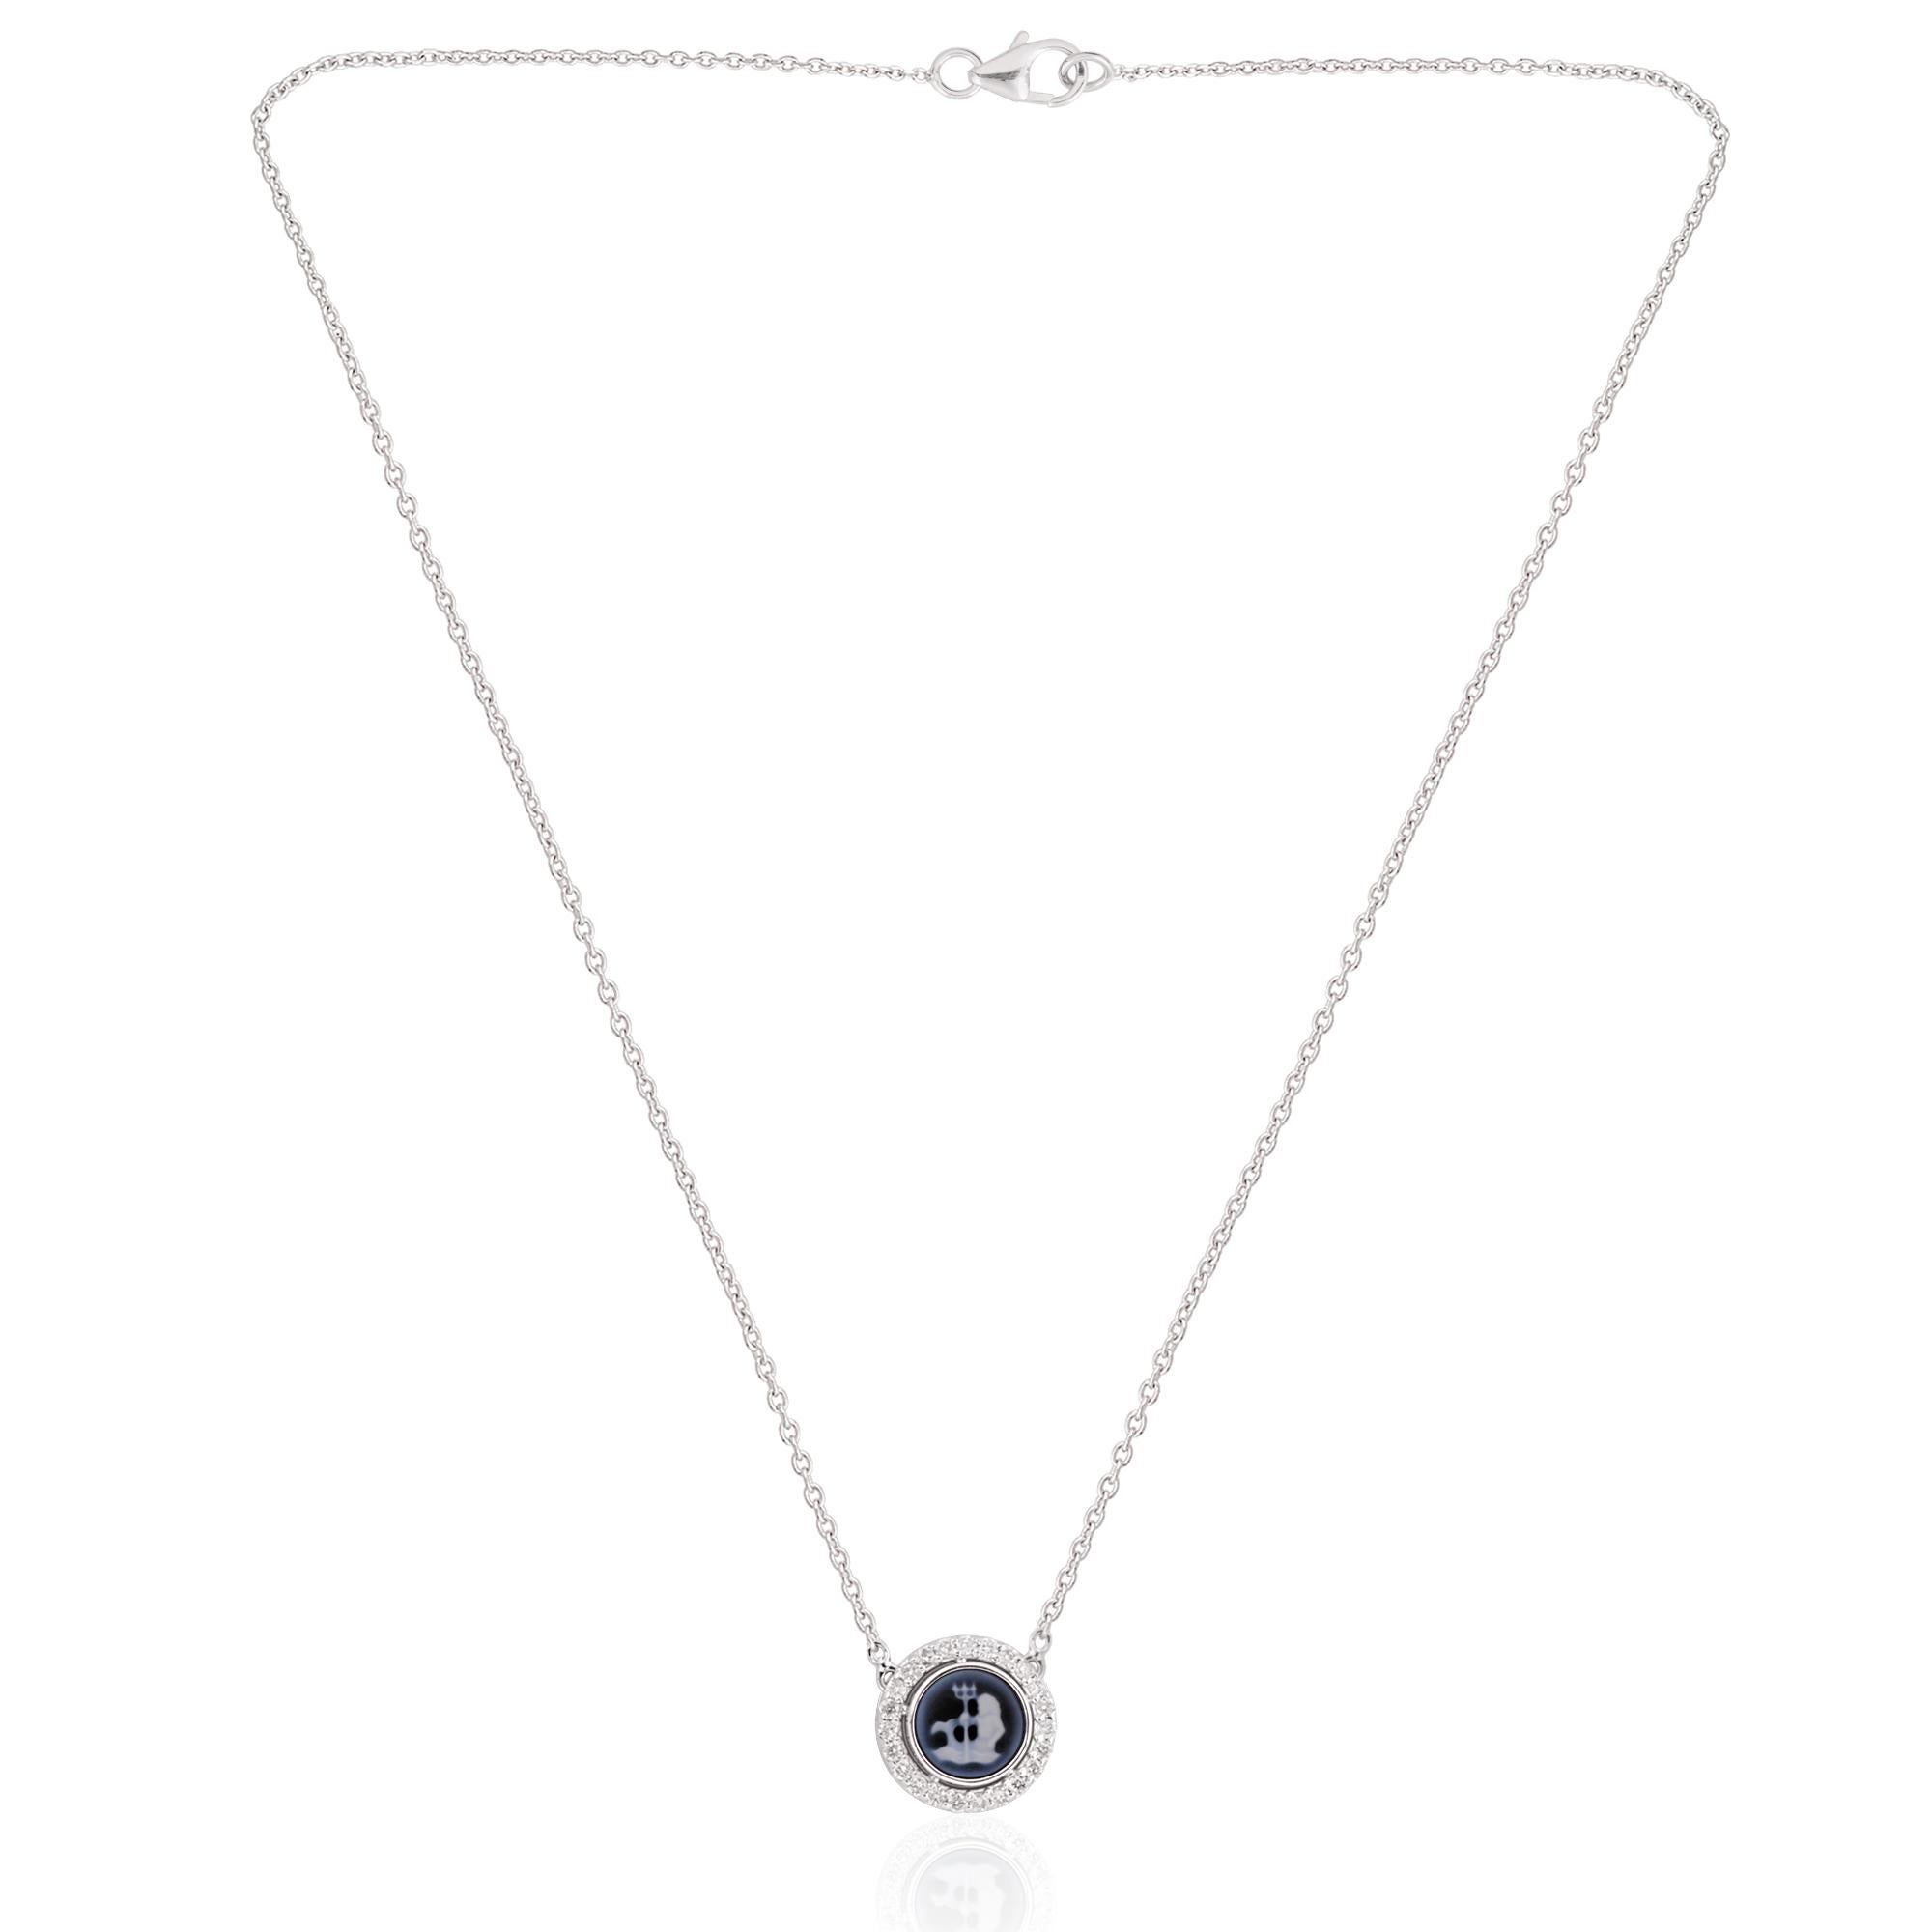 Round Cut Aquarius Zodiac Sign H/SI Pave Diamond Pendant 14k White Gold Necklace 1.03 Tcw For Sale